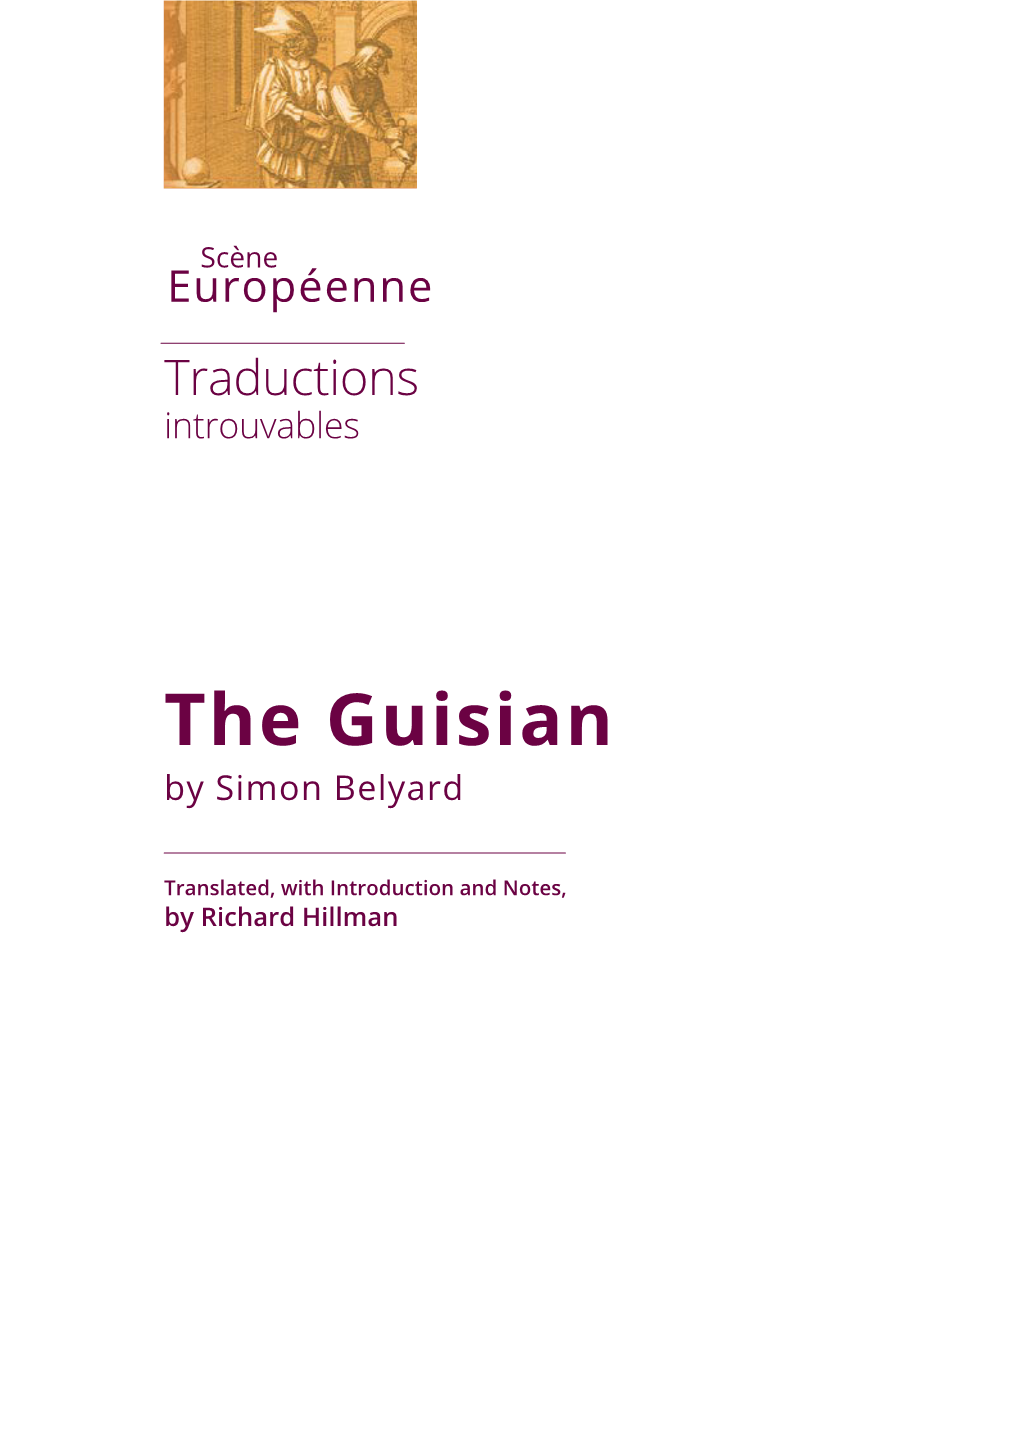 The Guisian by Simon Belyard